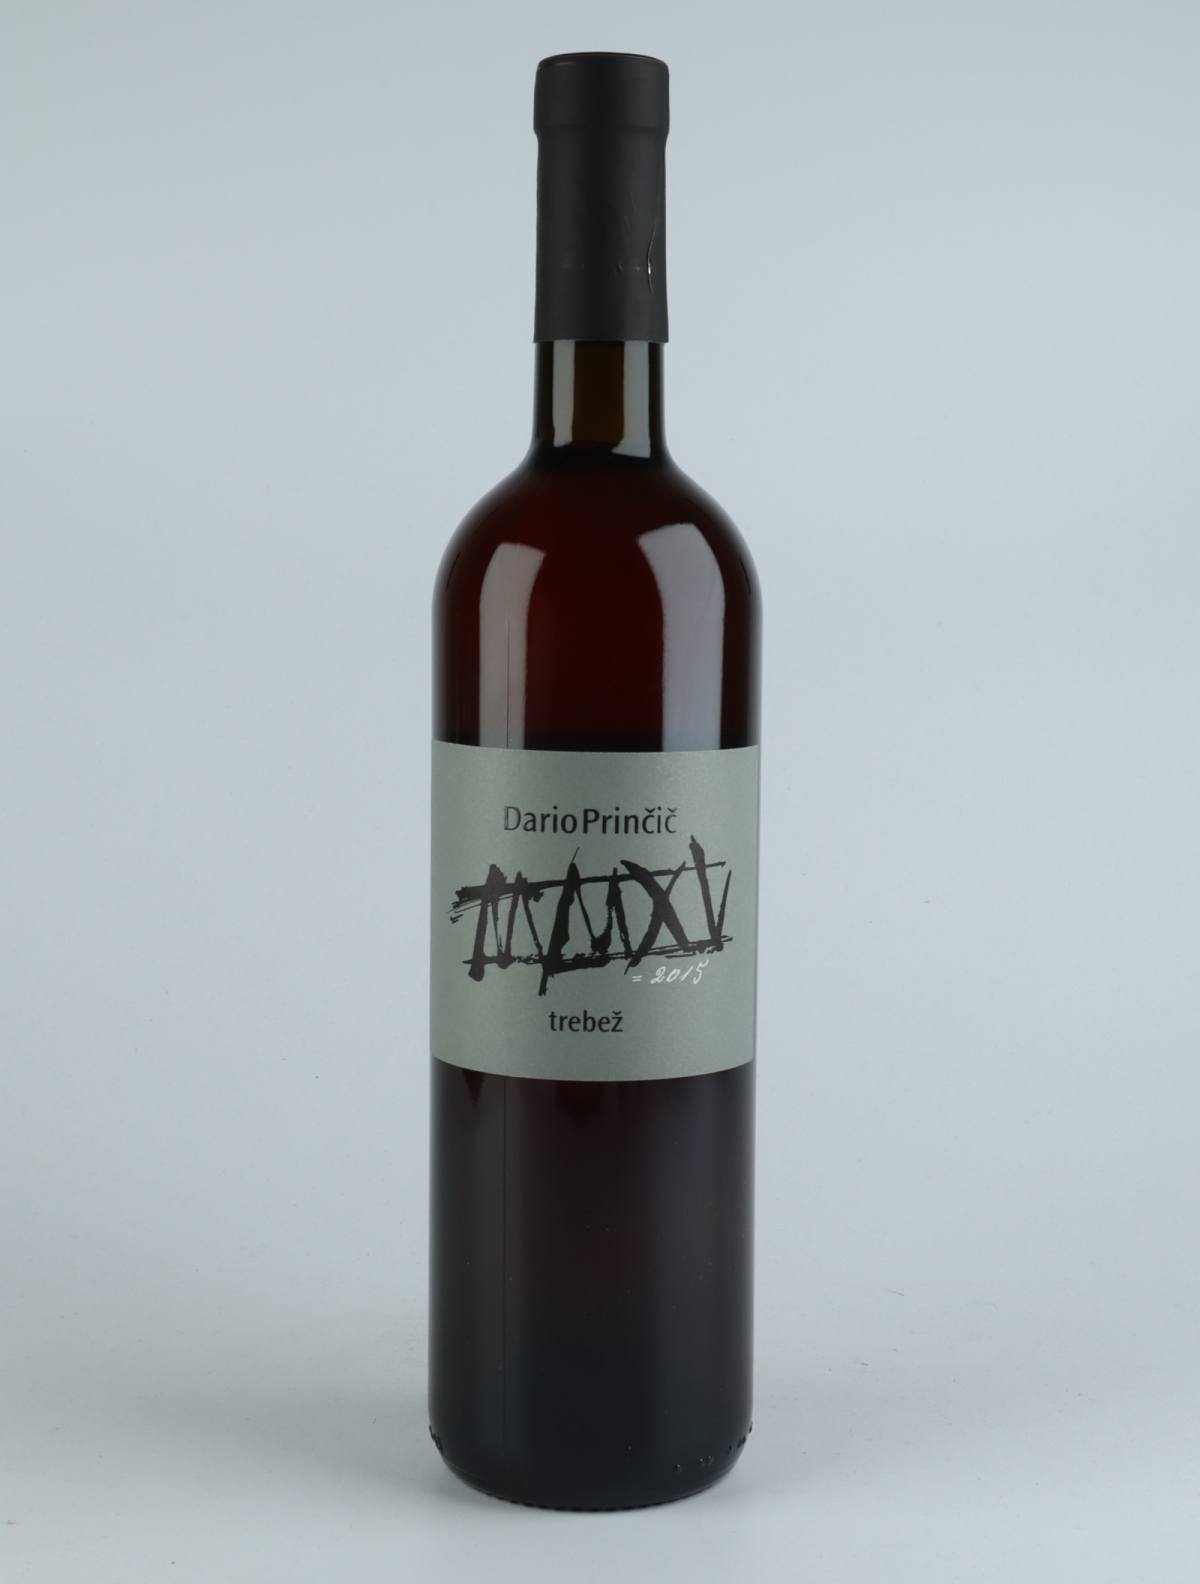 A bottle 2015 Bianco Trebez Orange wine from Dario Princic, Friuli in Italy